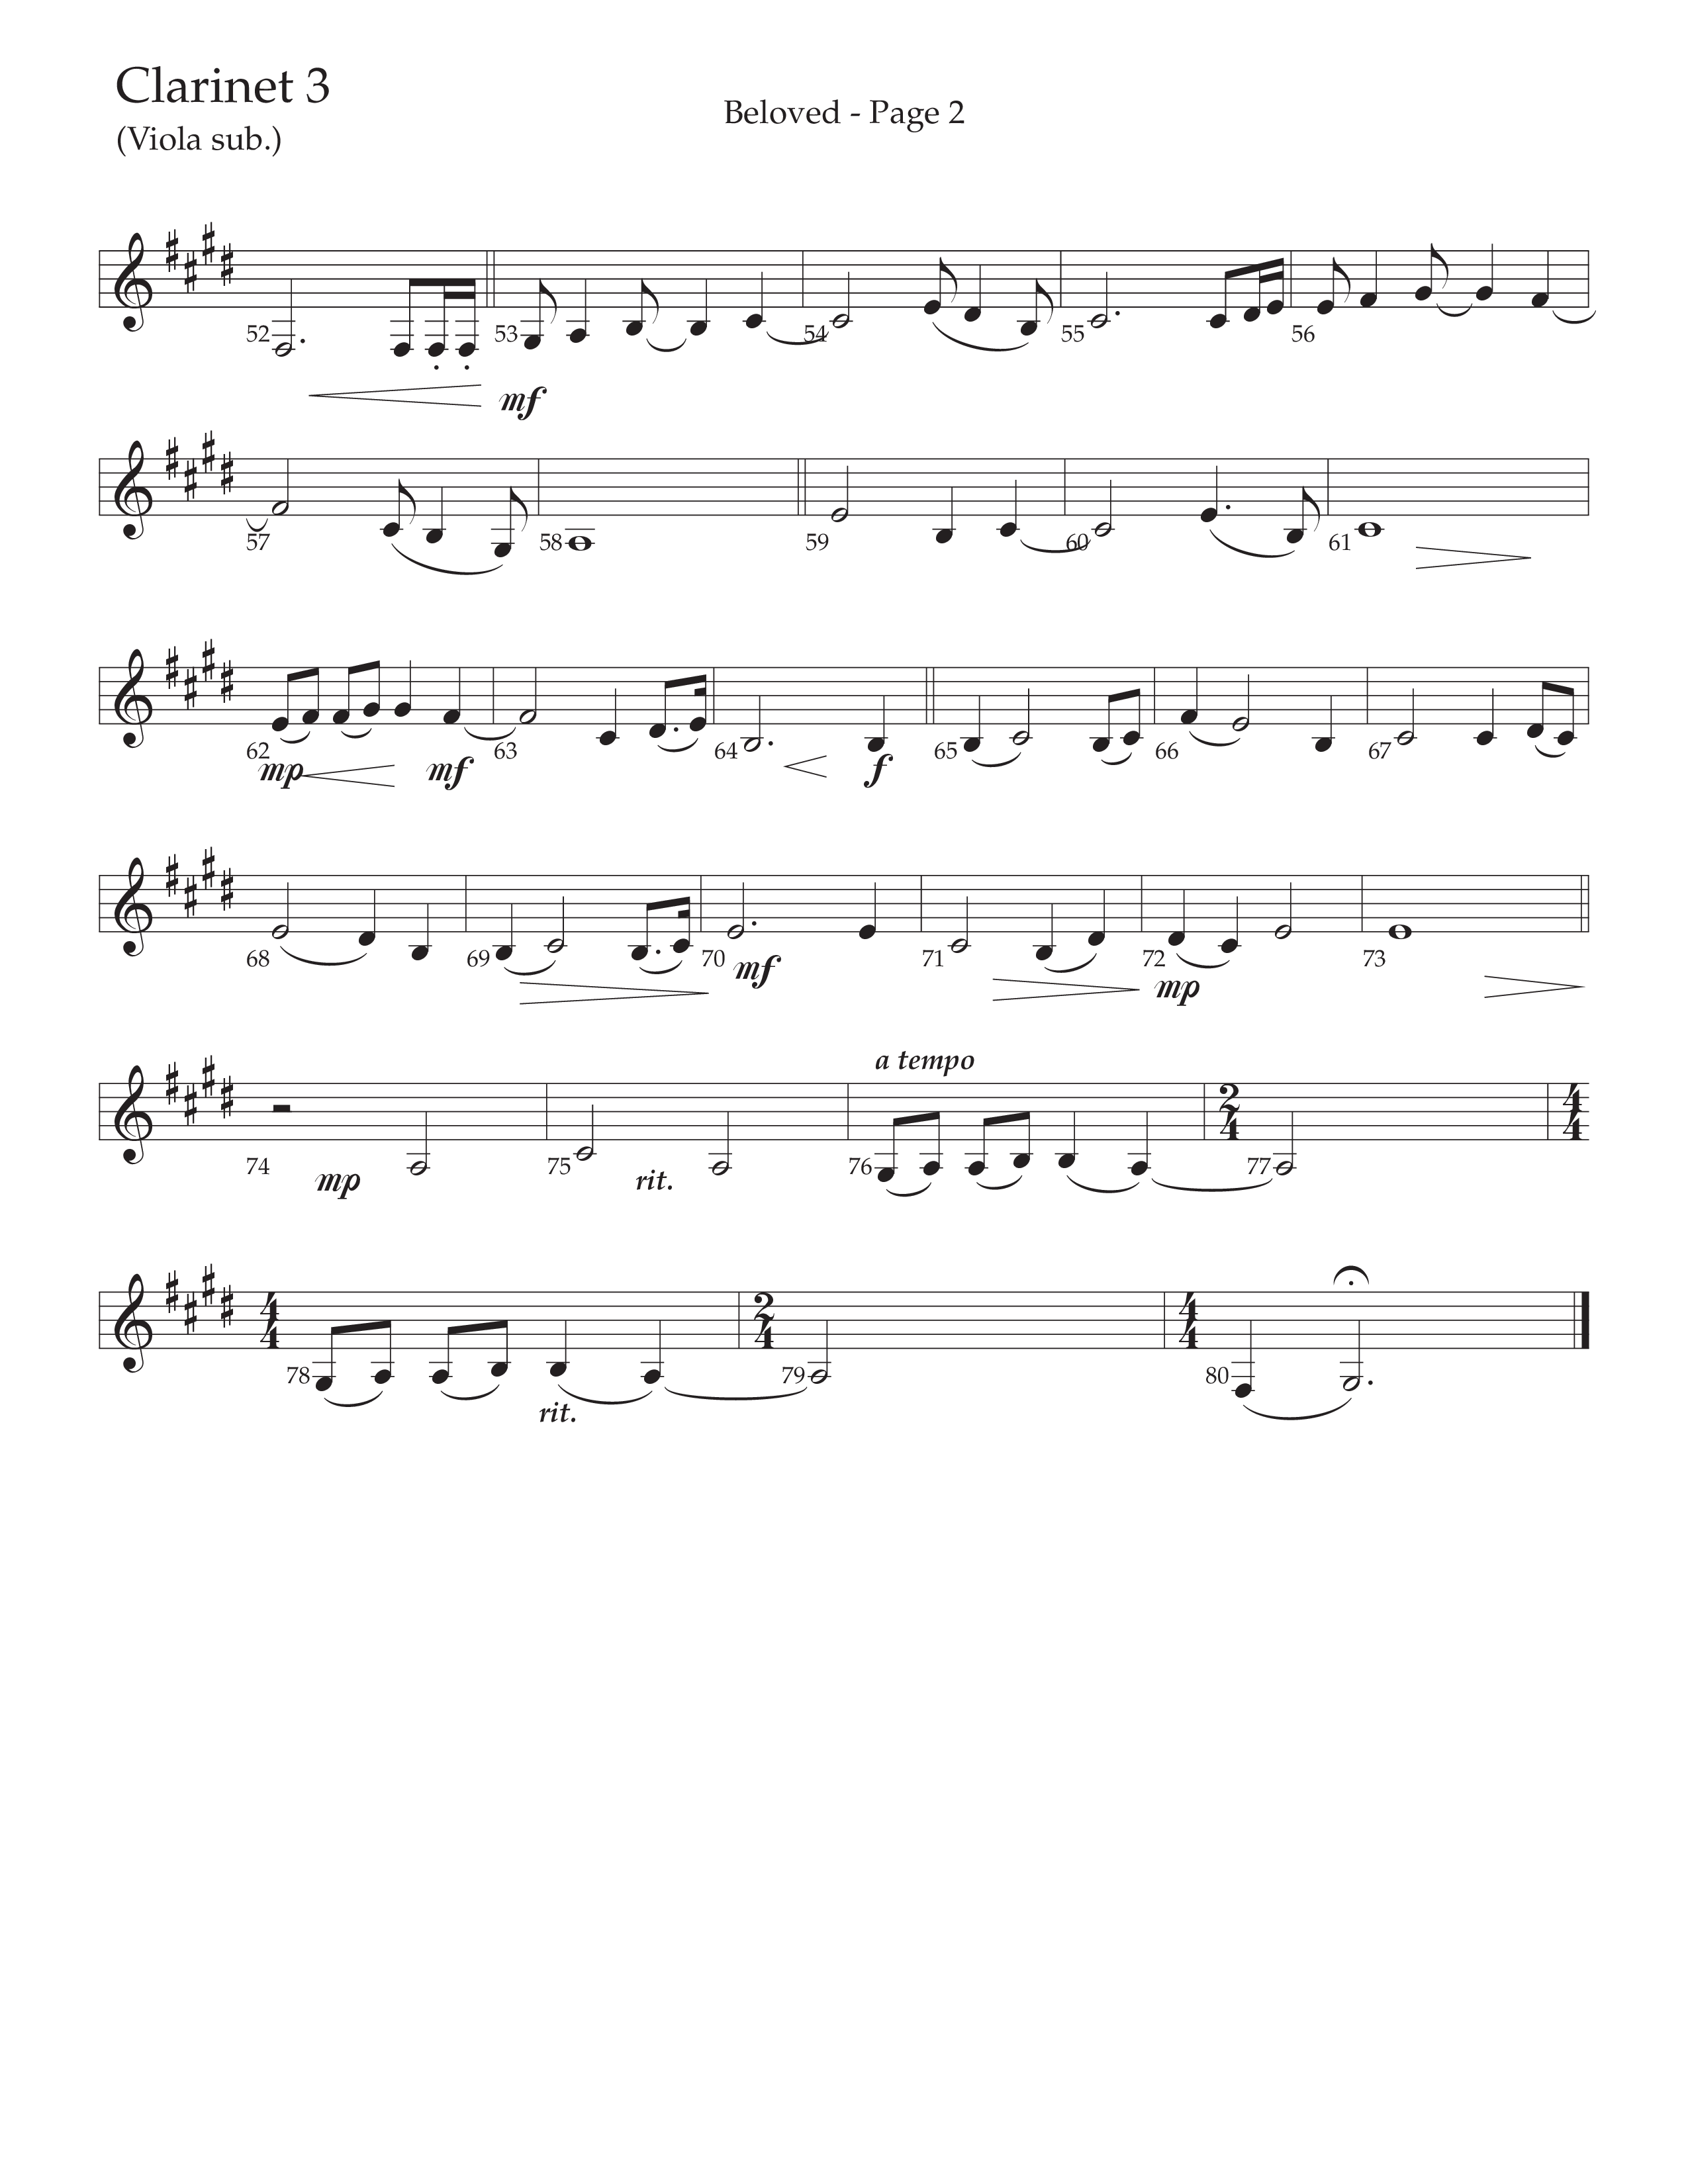 Beloved (Choral Anthem SATB) Clarinet 3 (Daywind Worship / Arr. Russell Mauldin)